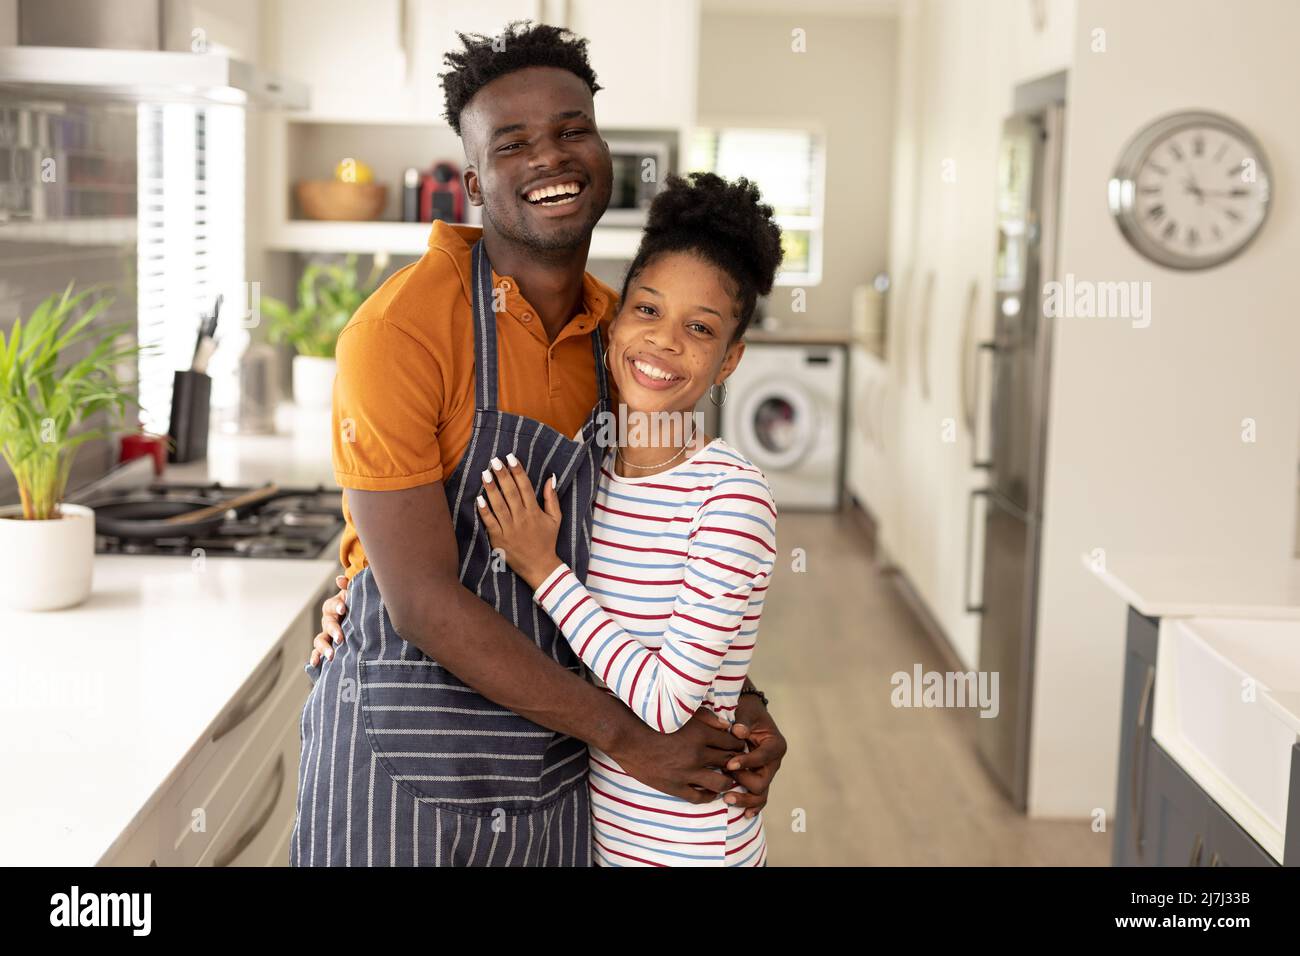 https://c8.alamy.com/comp/2J7J33B/portrait-of-cheerful-african-american-young-man-wearing-apron-embracing-young-girlfriend-in-kitchen-2J7J33B.jpg